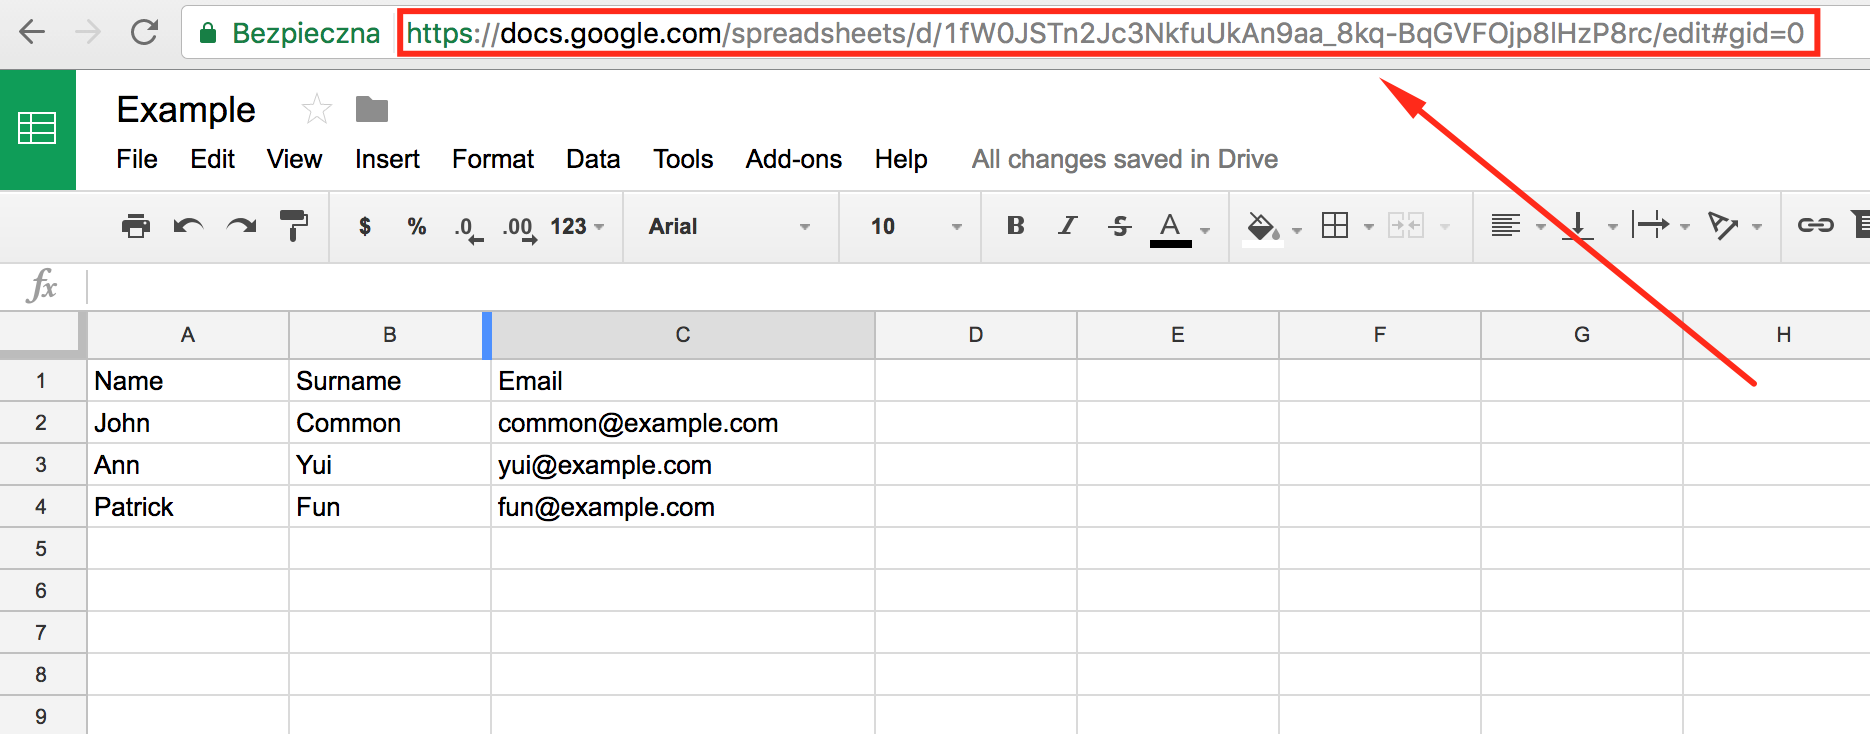 Copy Google Spreadsheets URL